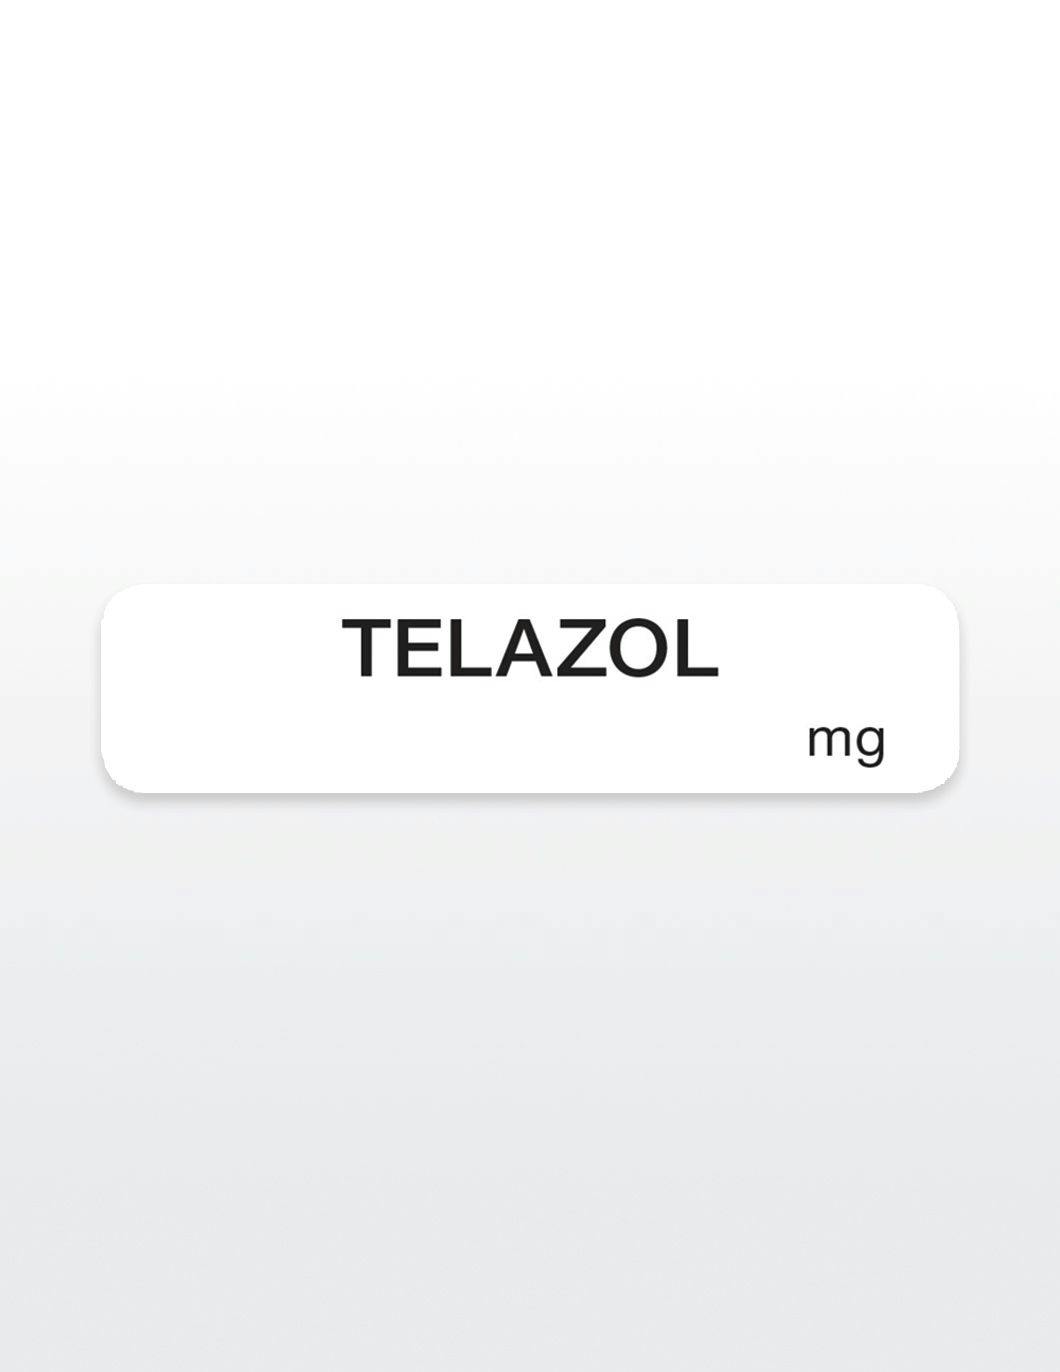 telazol-drug-syringe-stickers